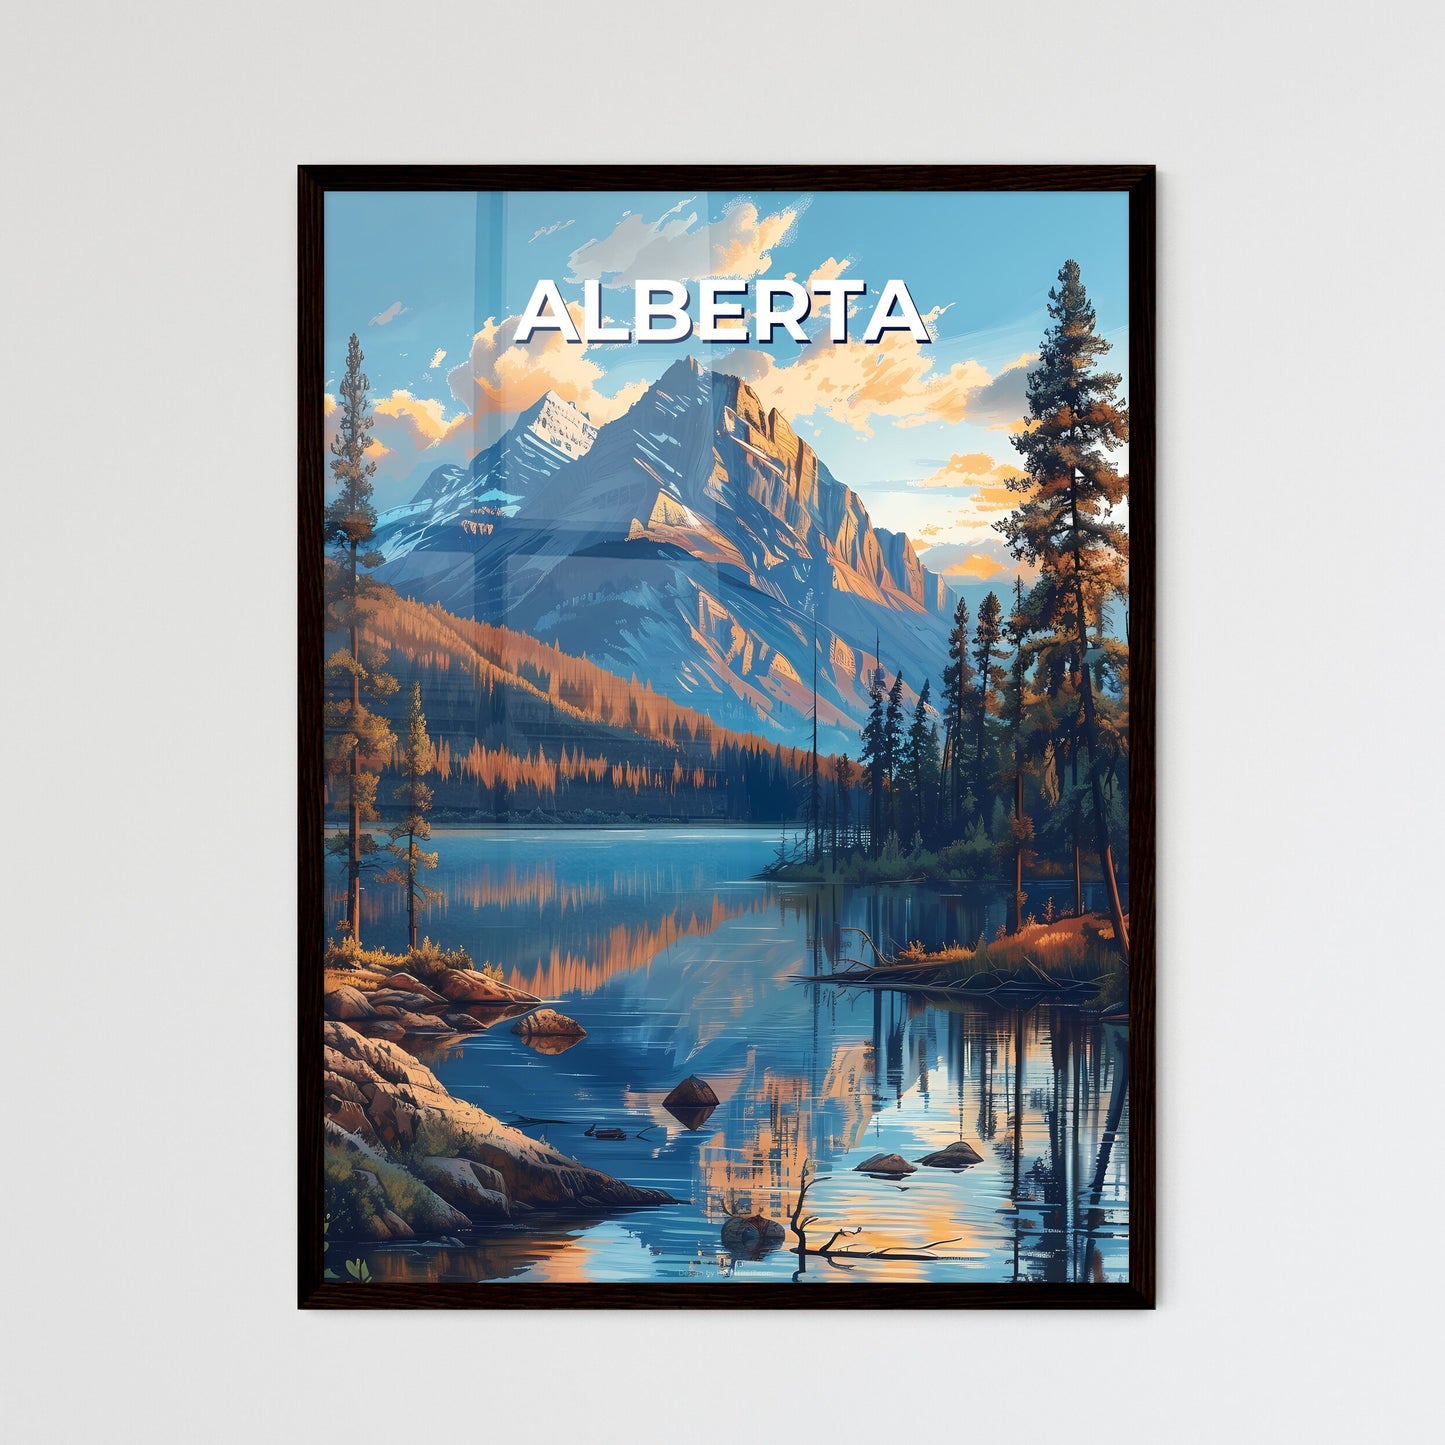 Vibrant Mountain Lake Painting - Alberta, Canada - Natural Scenery - Artistic Landscape - Scenic Artwork - Trees and Rocks